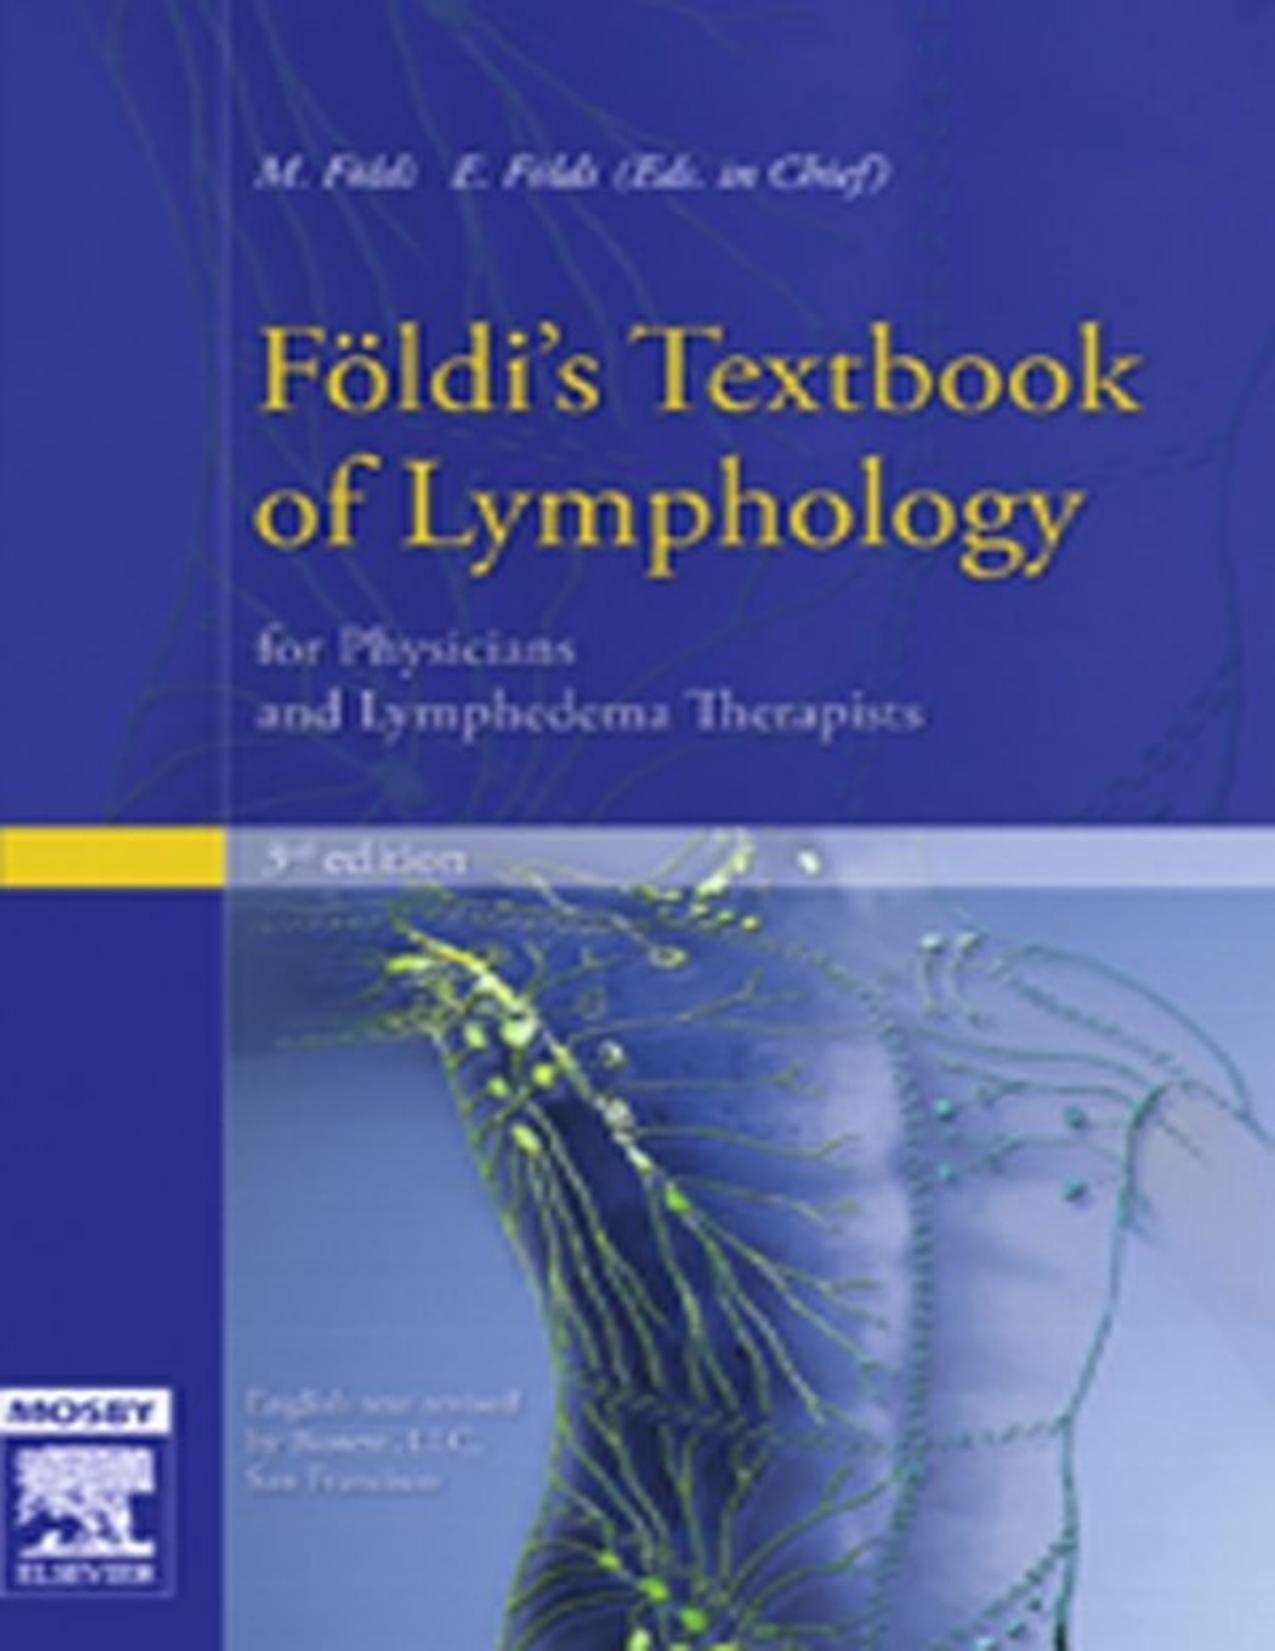 Foeldi's Textbook of Lymphology 3rd Edition.jpg